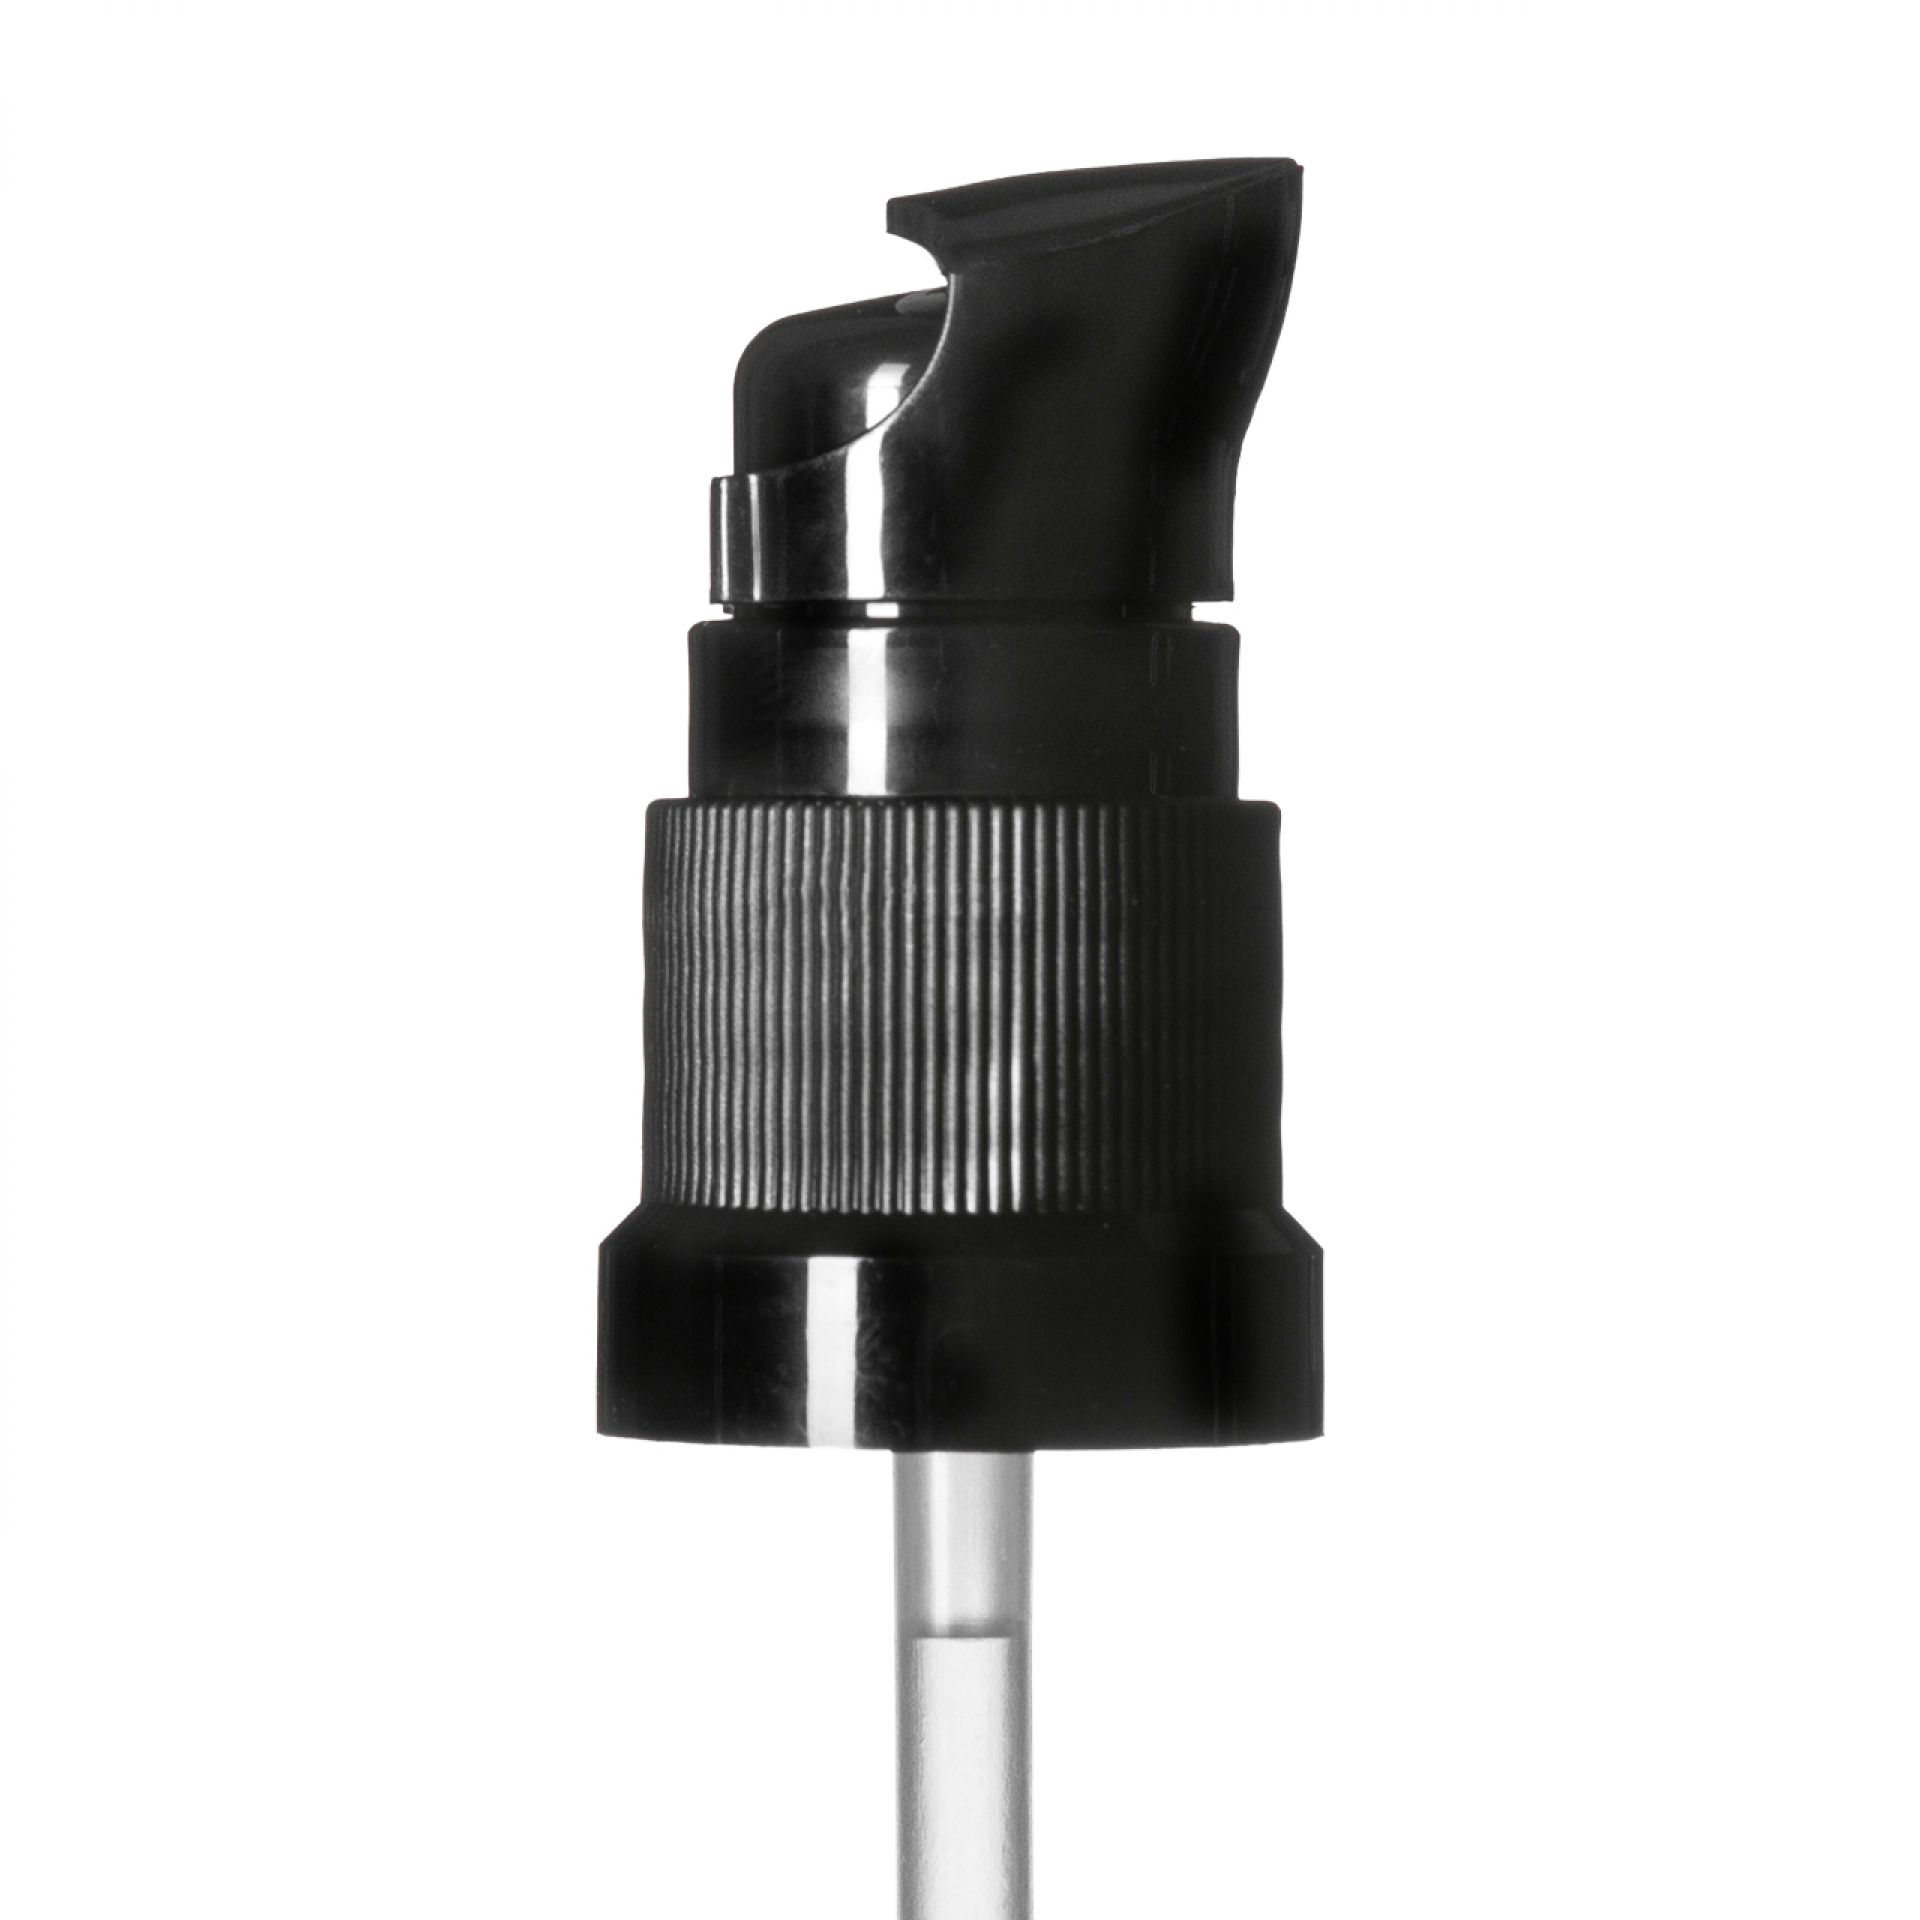 Lotion pump Metropolitan DIN18, PP, black, dose 0.14ml, black security clip (Orion 15)